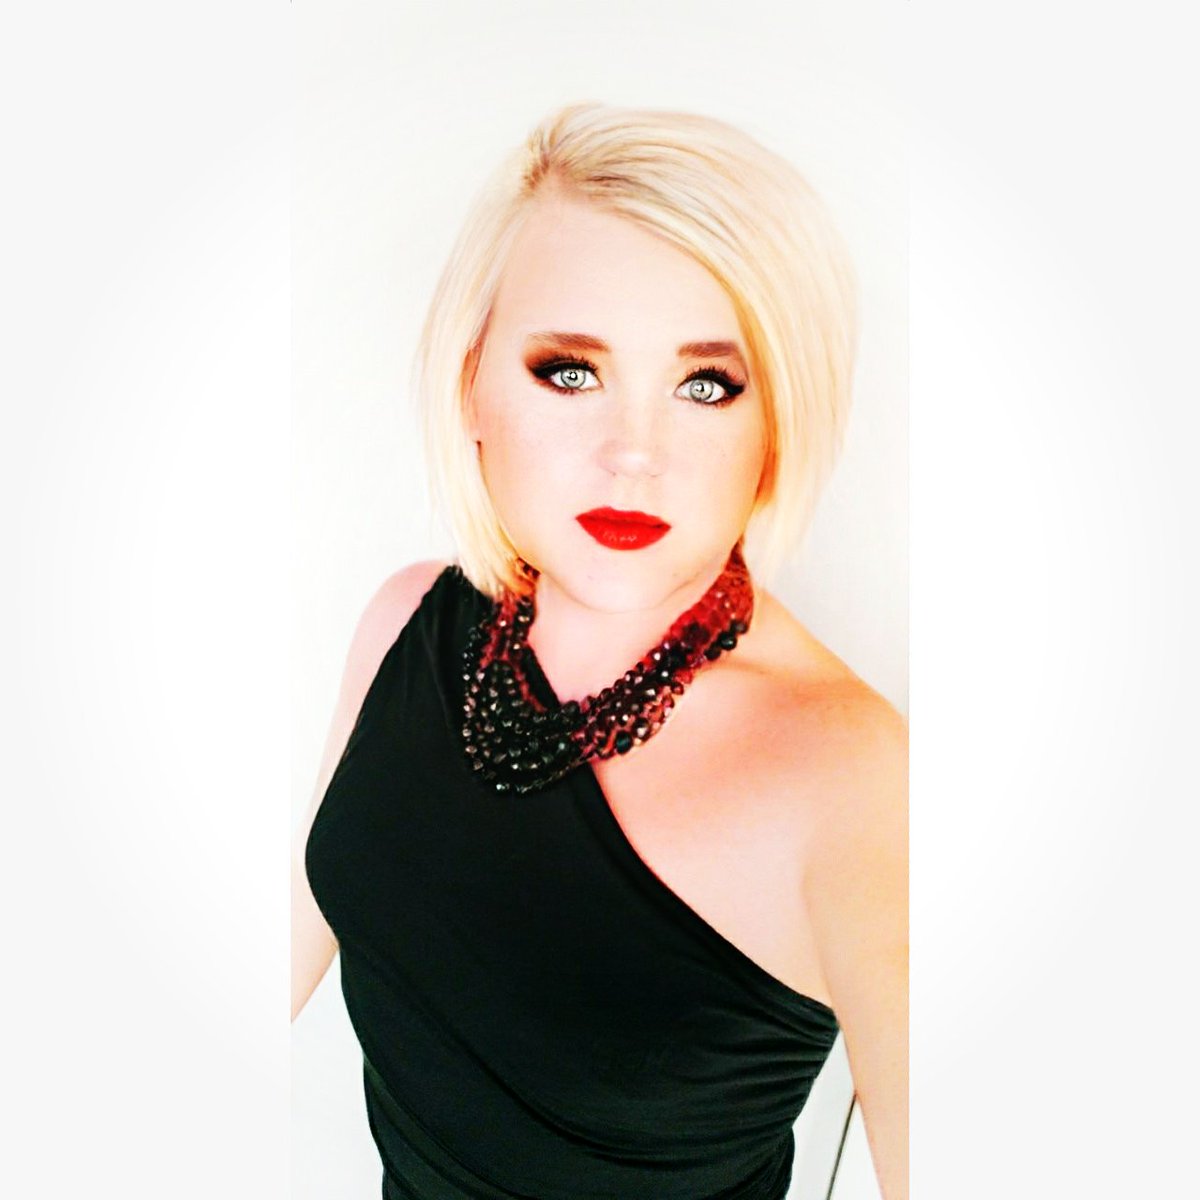 Bright white
in contrast
red
and black

#heavilyfilteredandedited #art #fake
#redlips #blueeyes #blonde #blondehair #straighthair #oneshoulderdress

instagram.com/p/CYxIQYuvZmG/